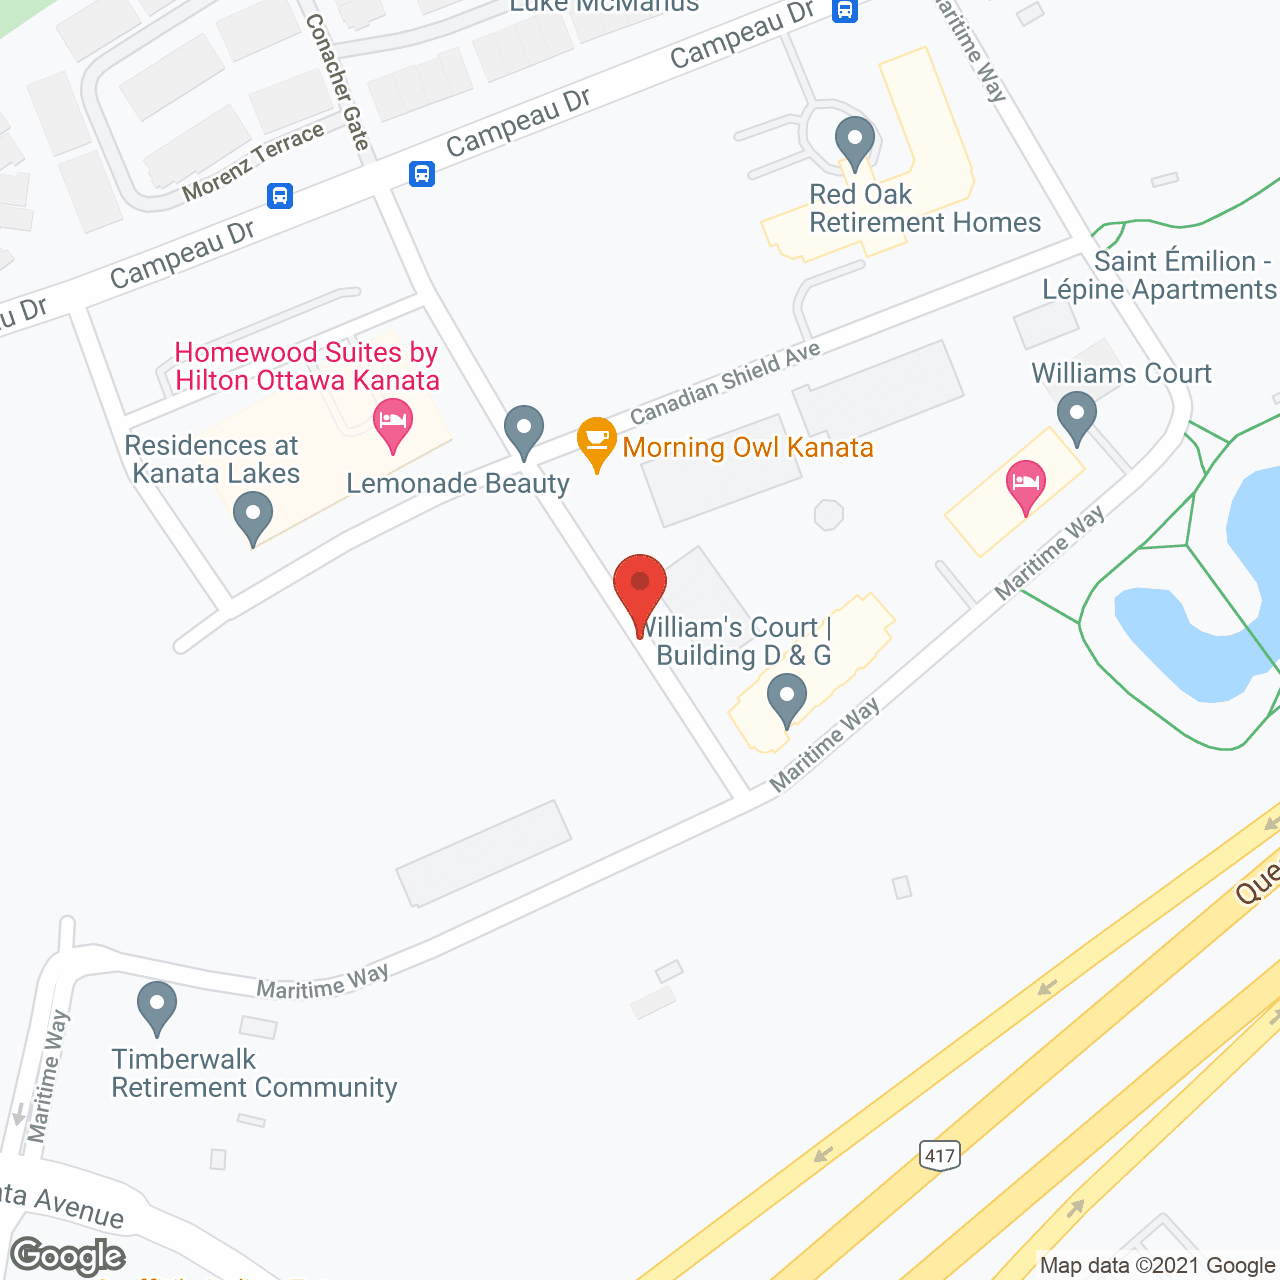 William's Court Building G in google map